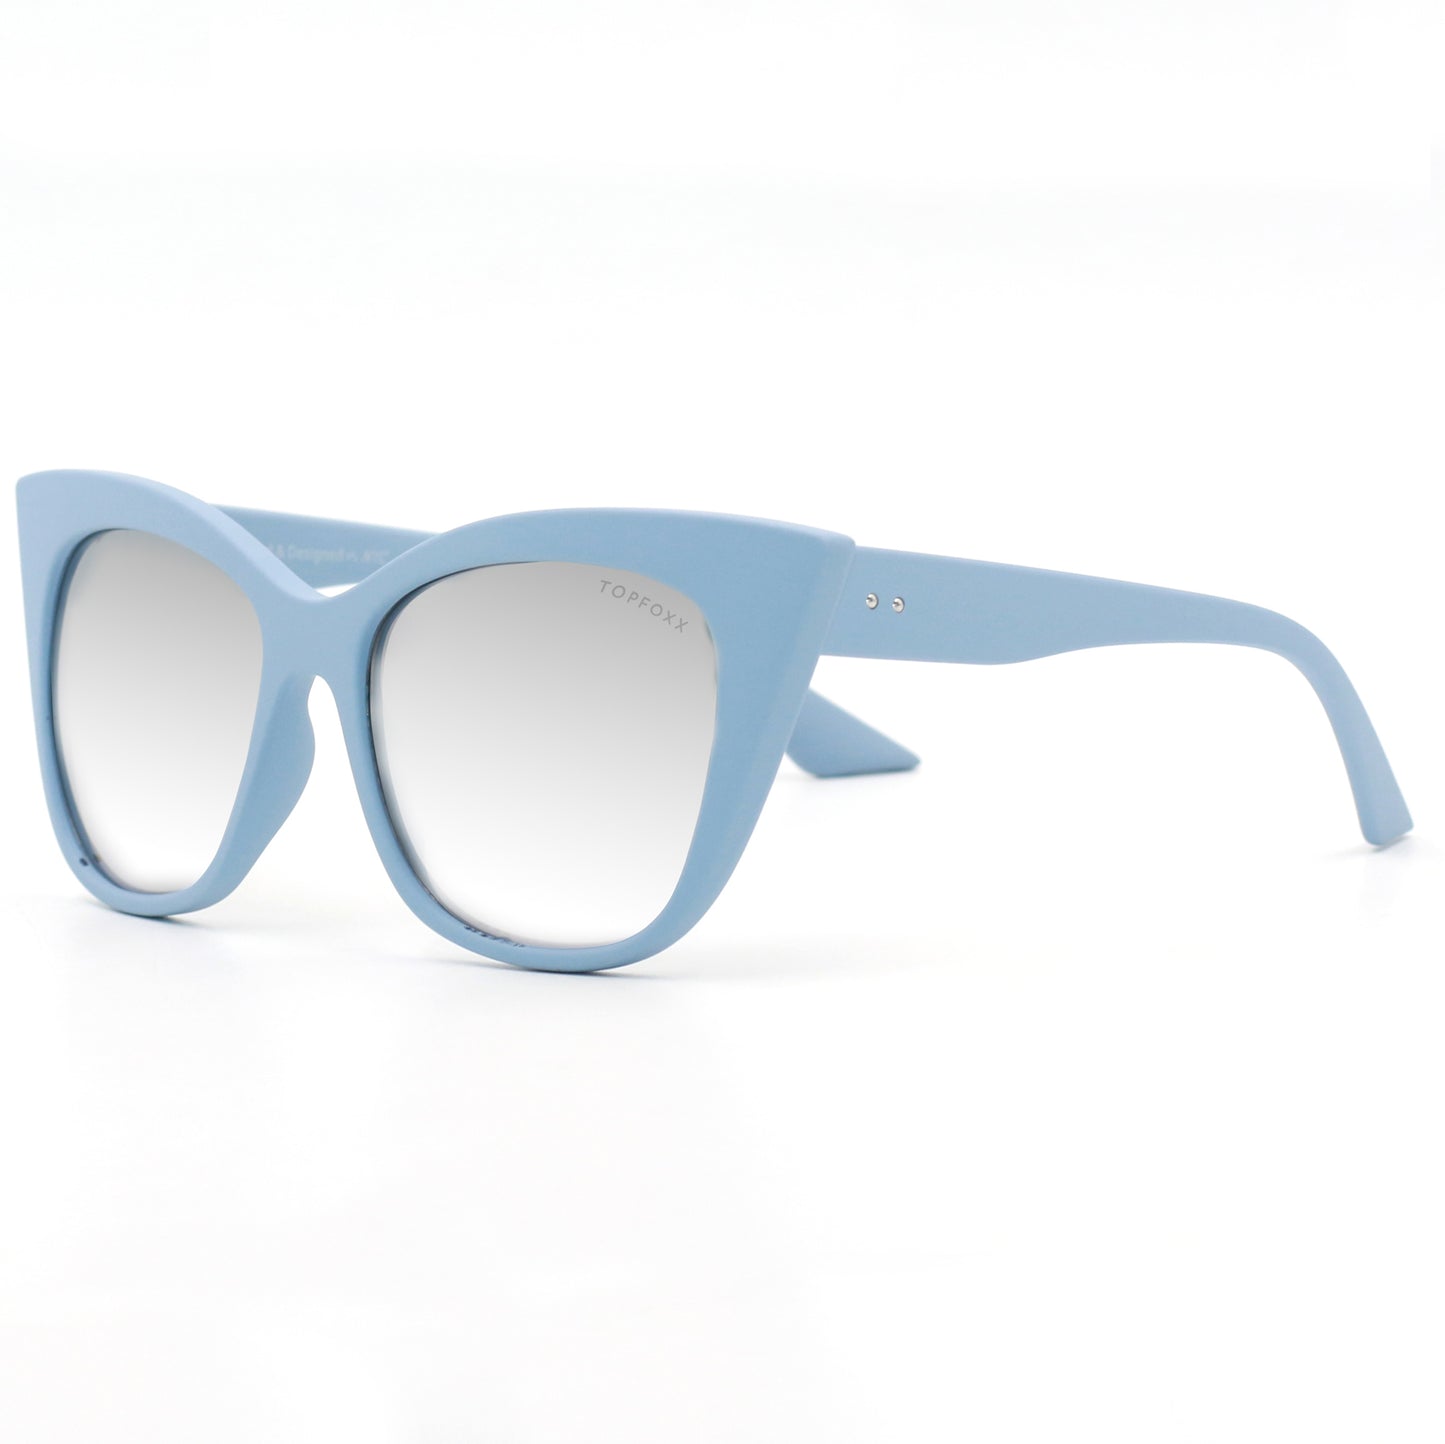 TopFoxx - Venice - Blue Silver Cat Eye Oversized Sunglasses for women - Side Details